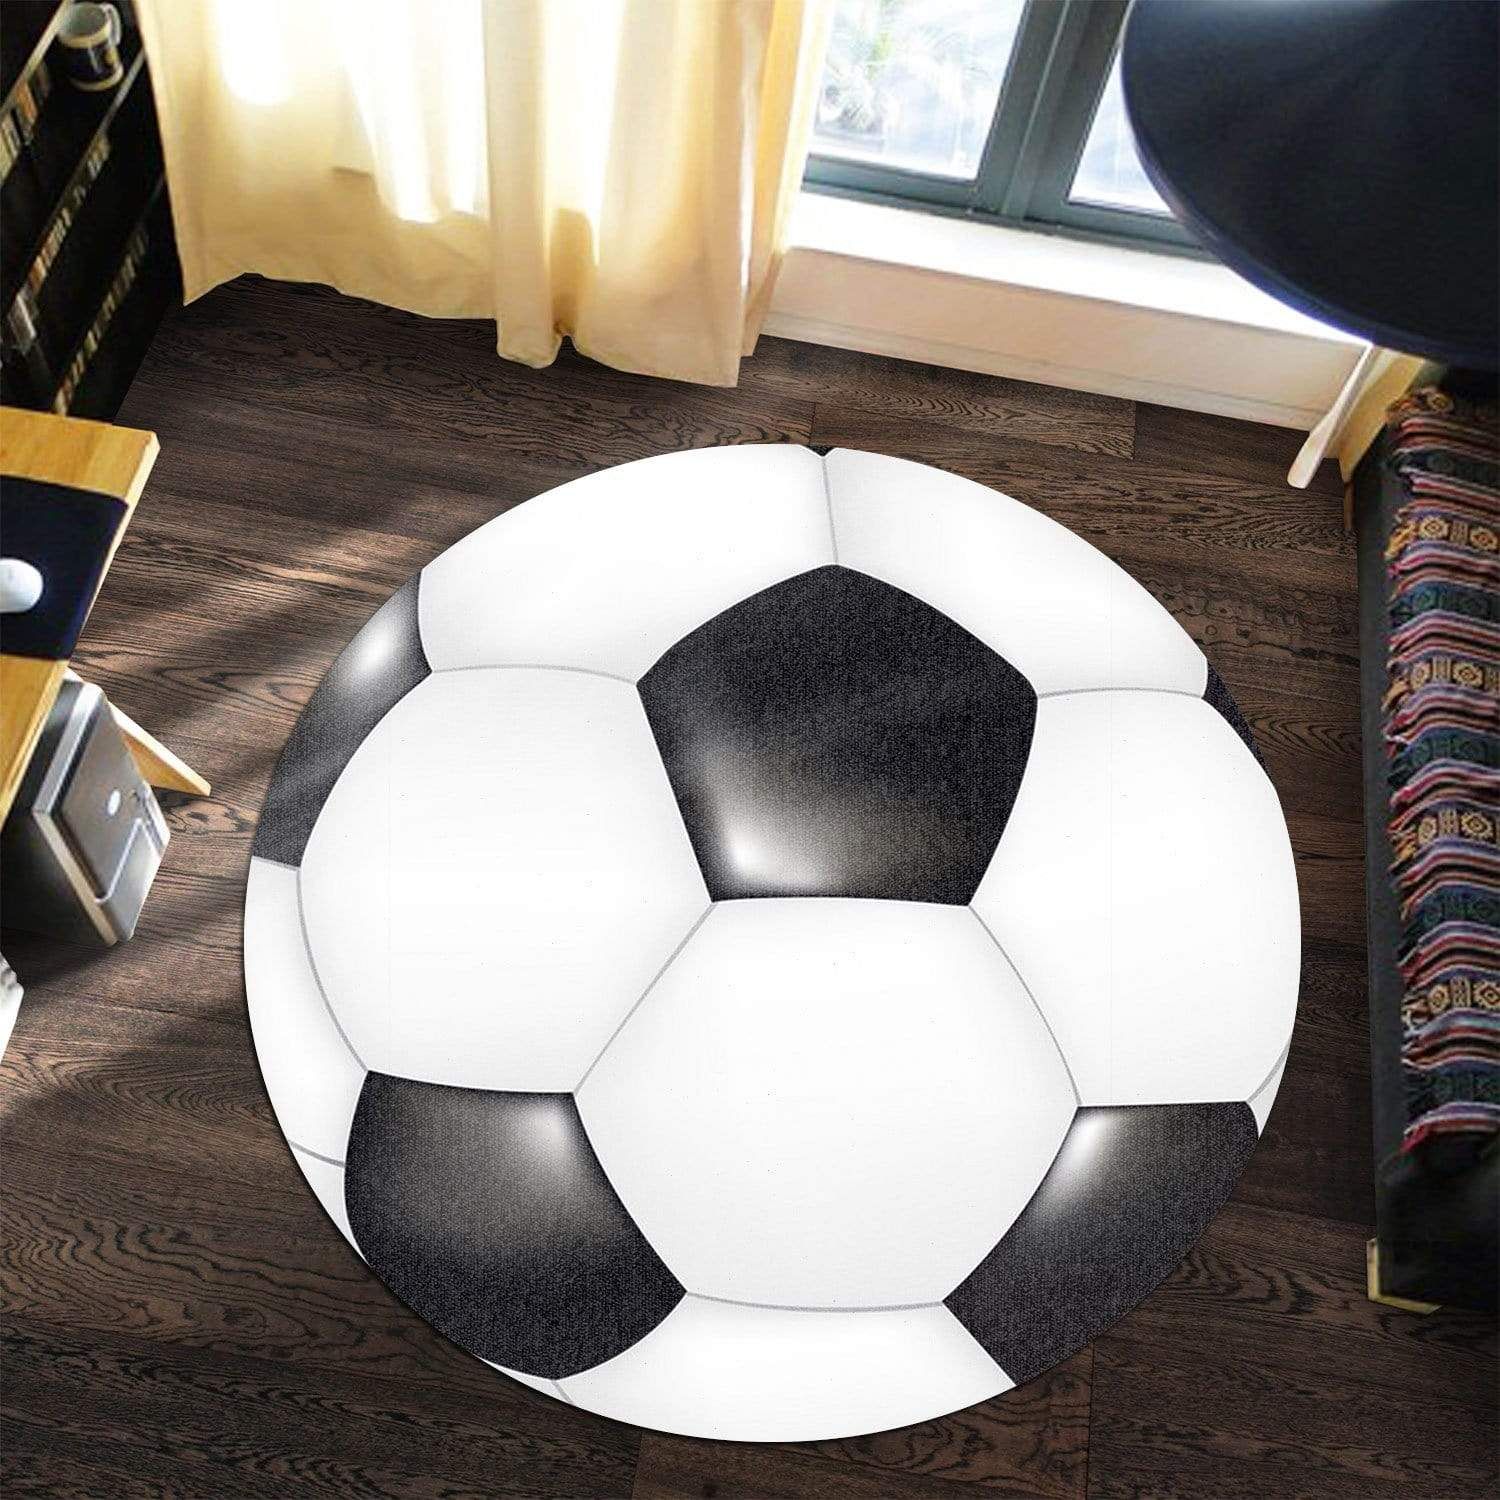 Soccer Ball 3D Round Carpet